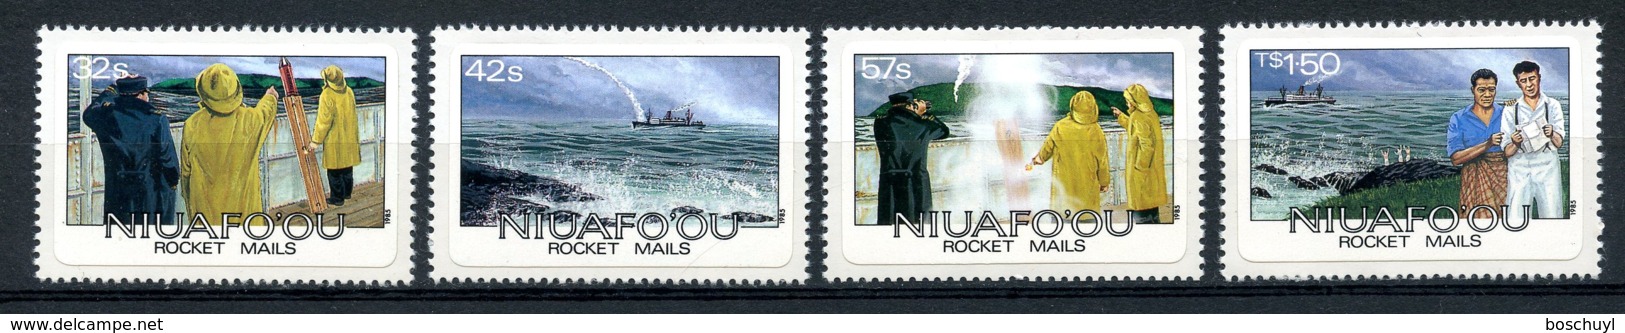 Niuafo'ou, Tin Can Island, 1985, Rocket Mail, Boats, MNH, Michel 61-64 - Sonstige - Ozeanien